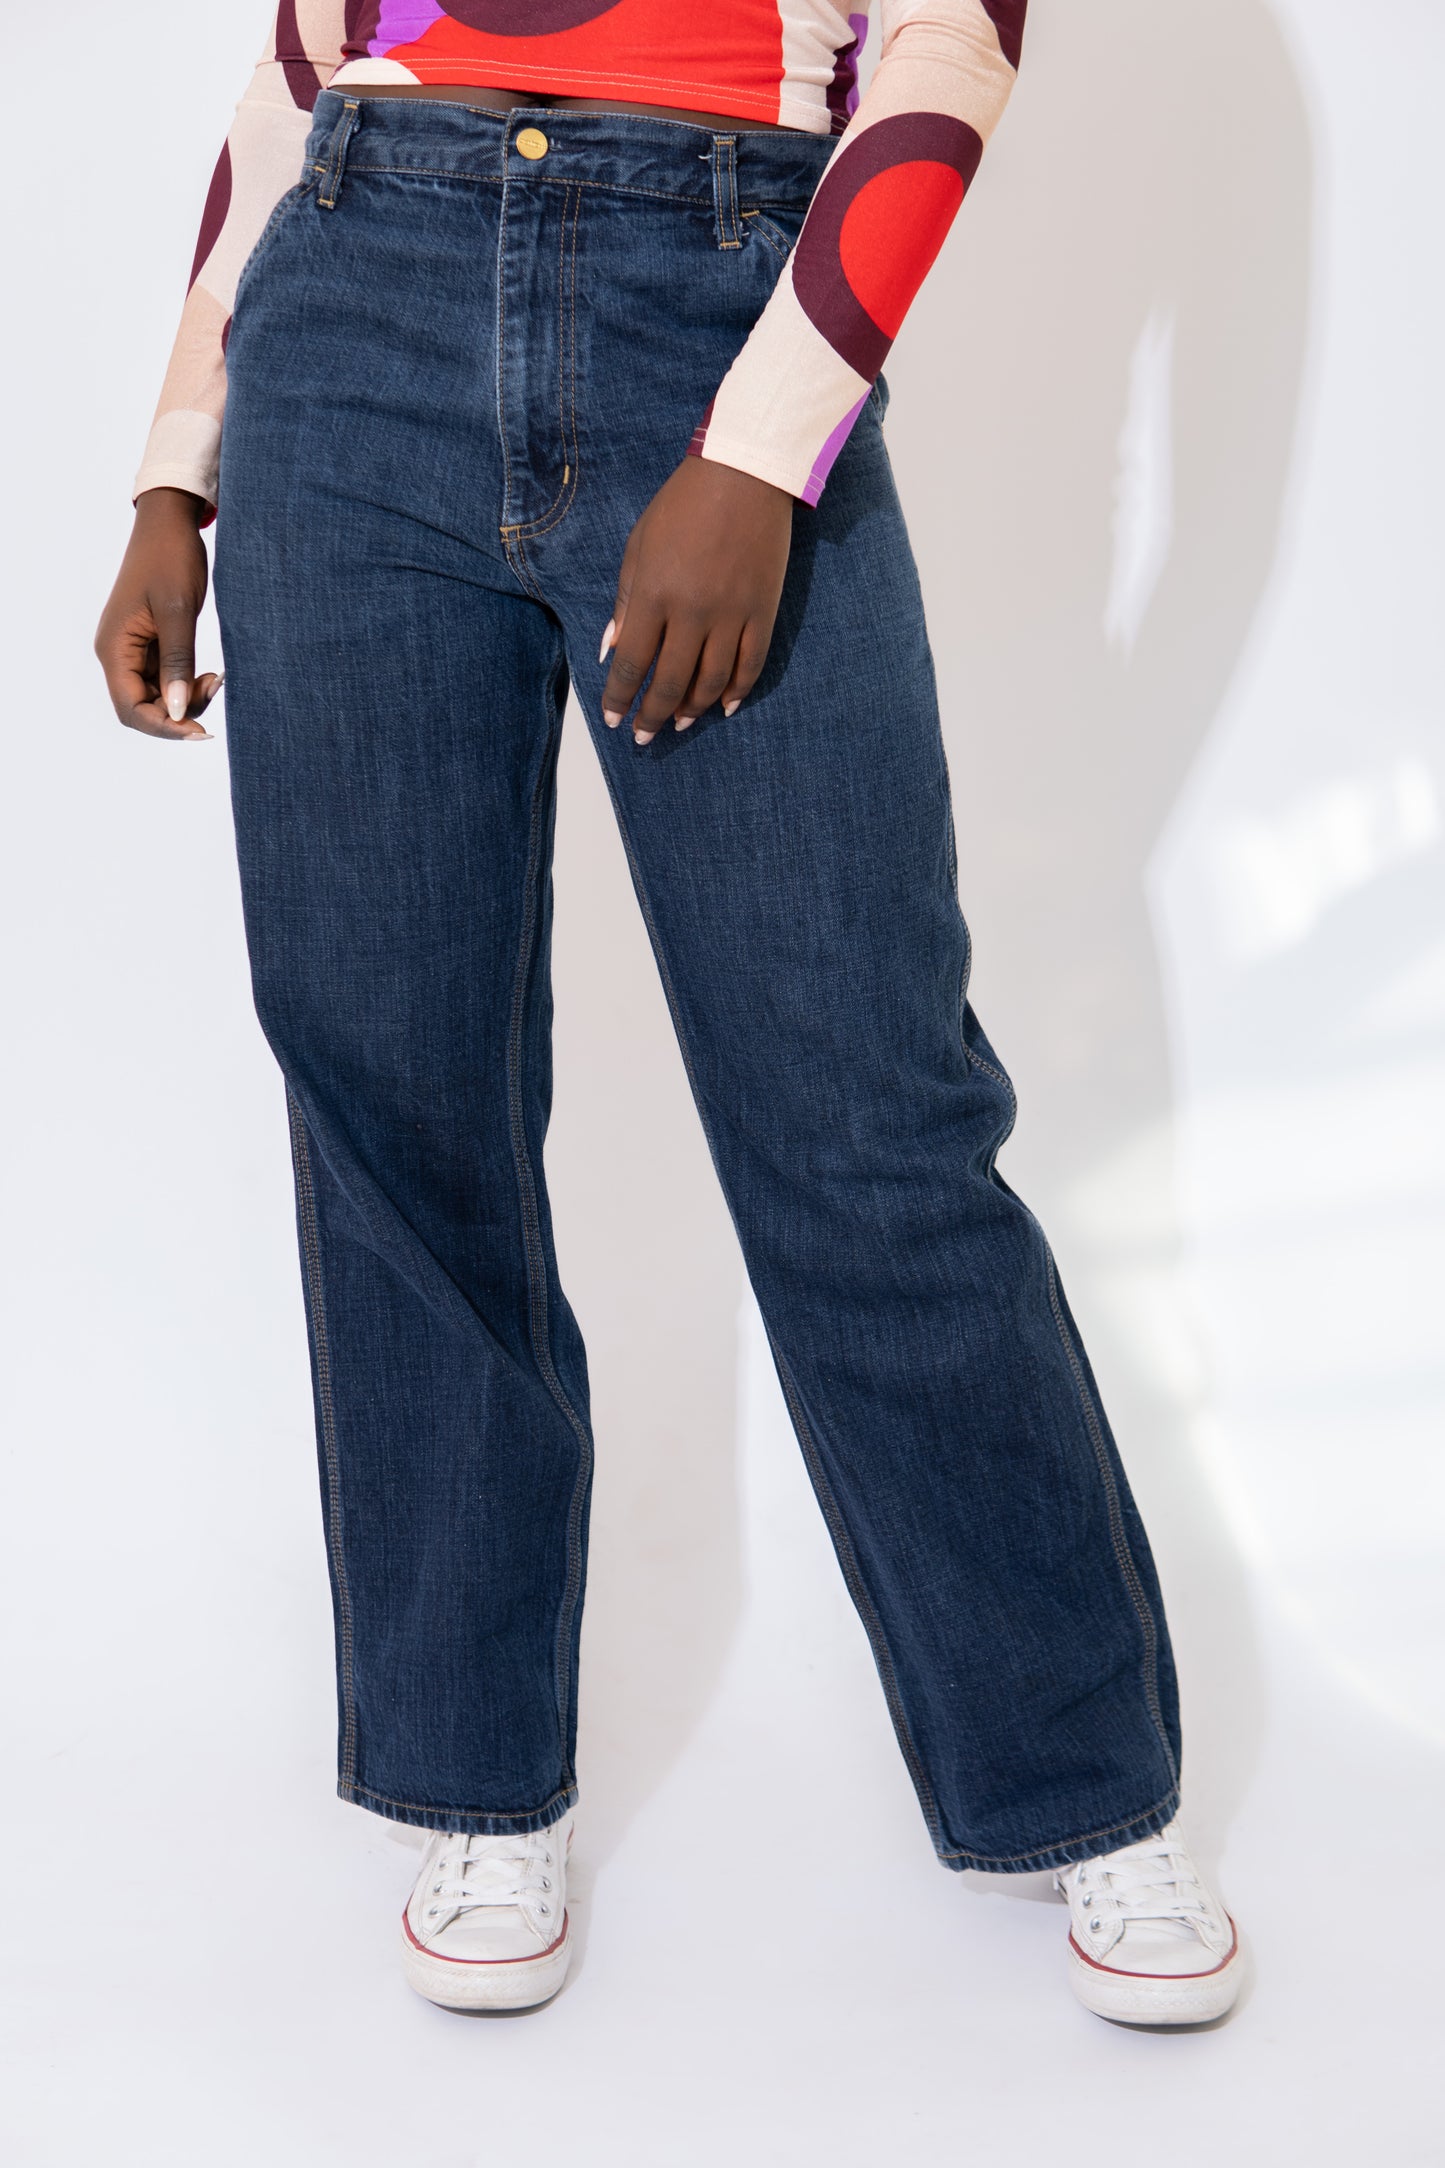 Carhartt Jeans [38]